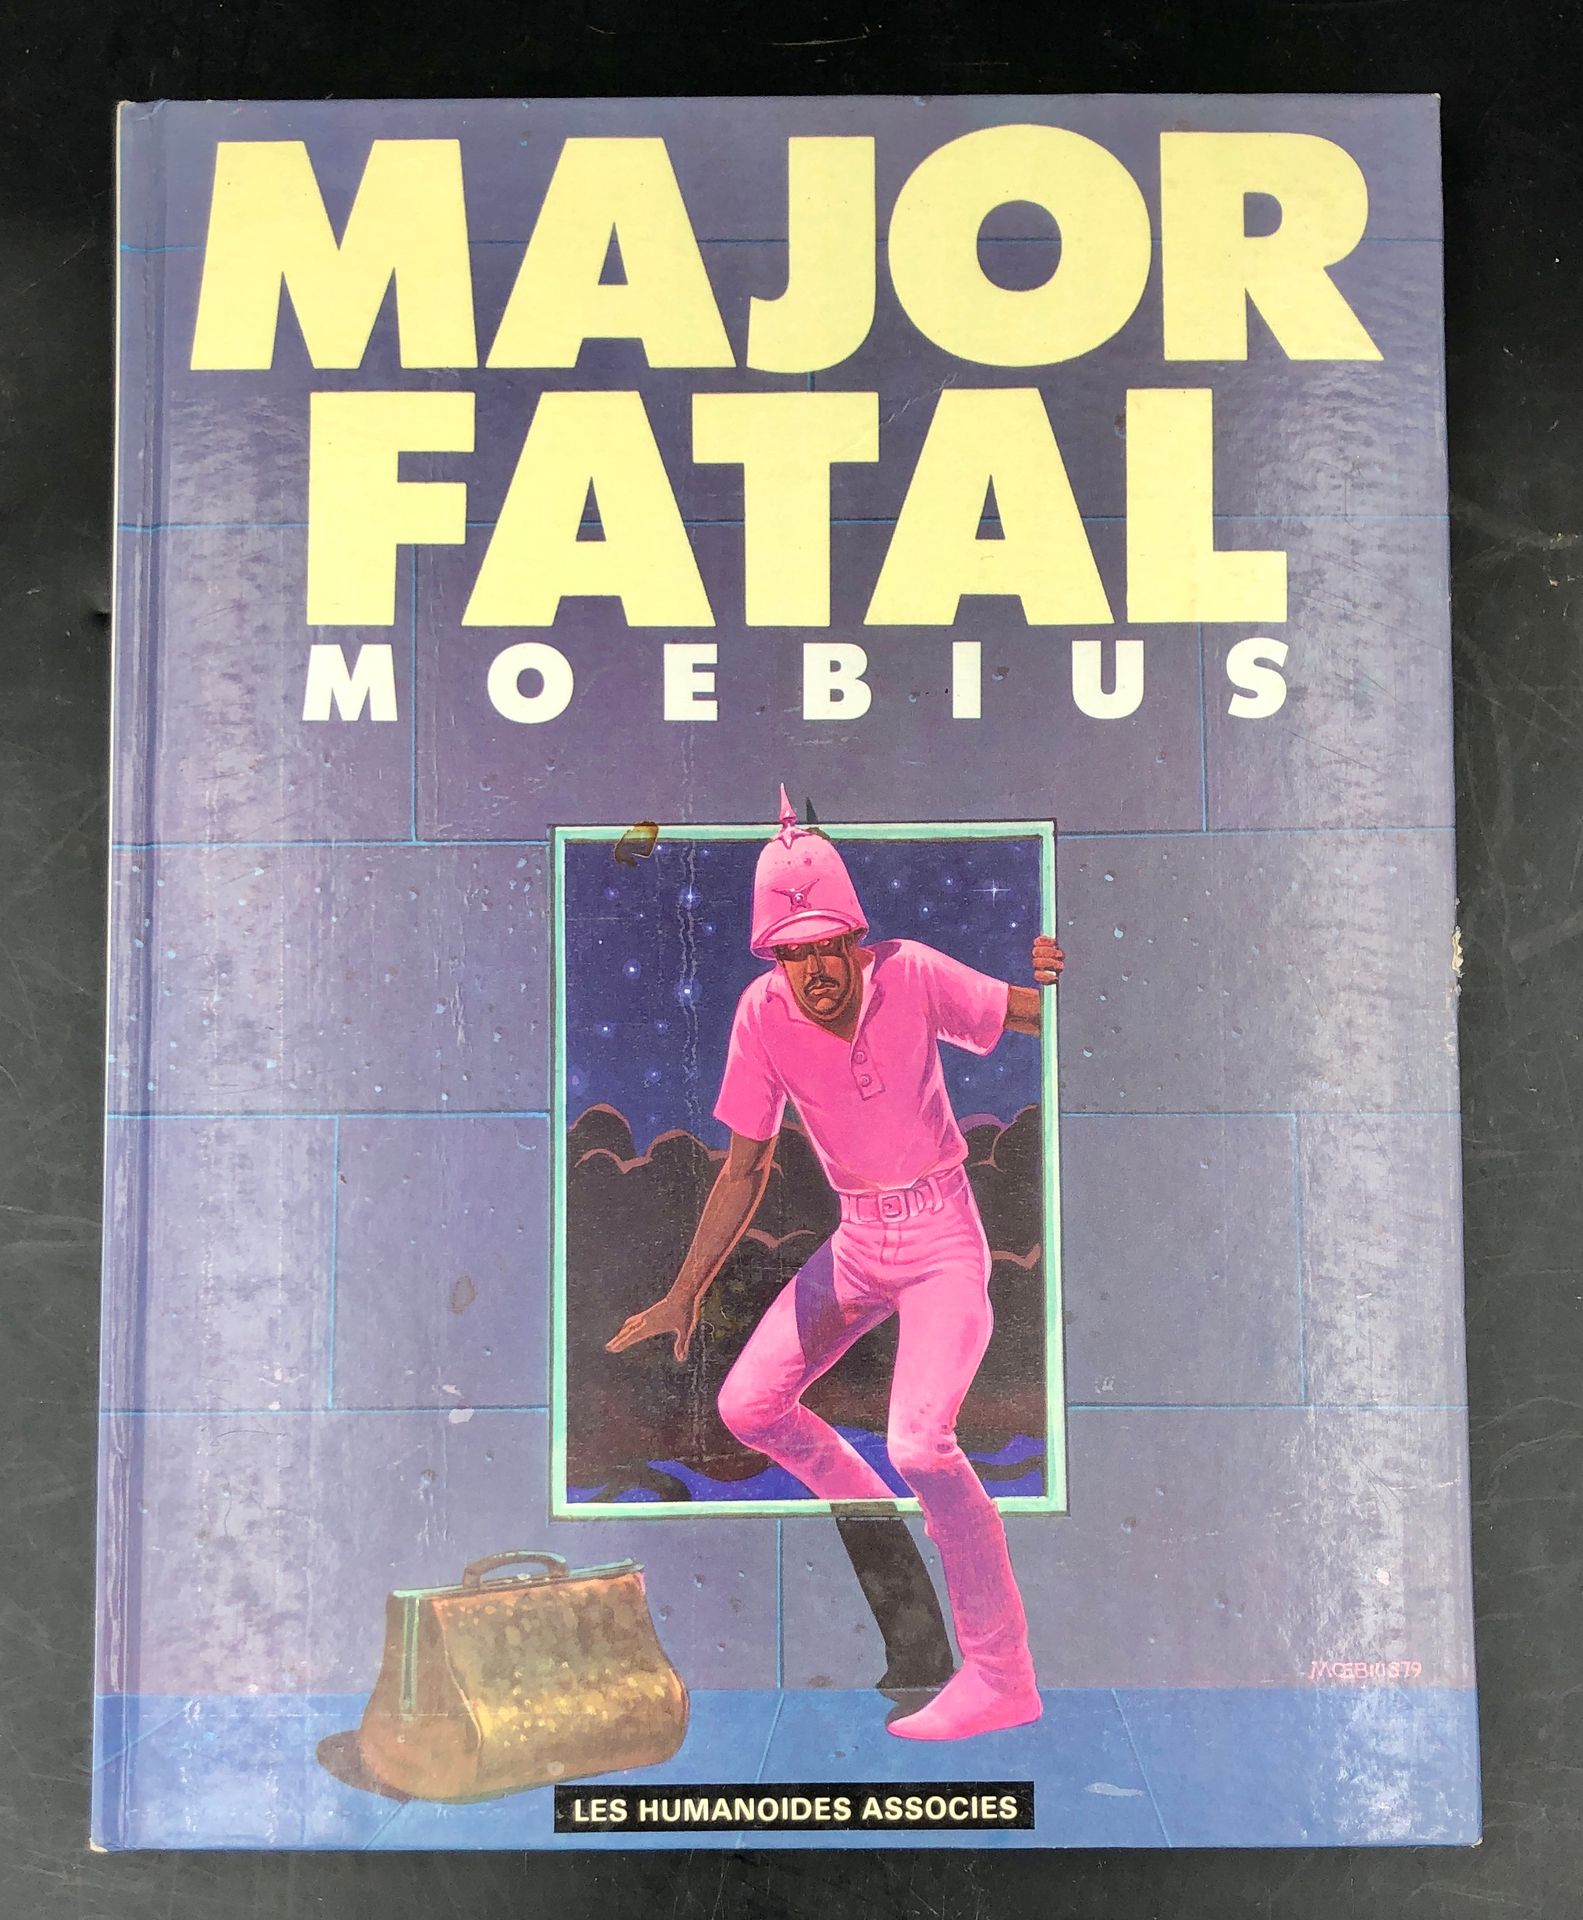 Null MOEBIUS, Major fatal, ed. Les Humanoïdes associés, 1979 (some stains, wear,&hellip;